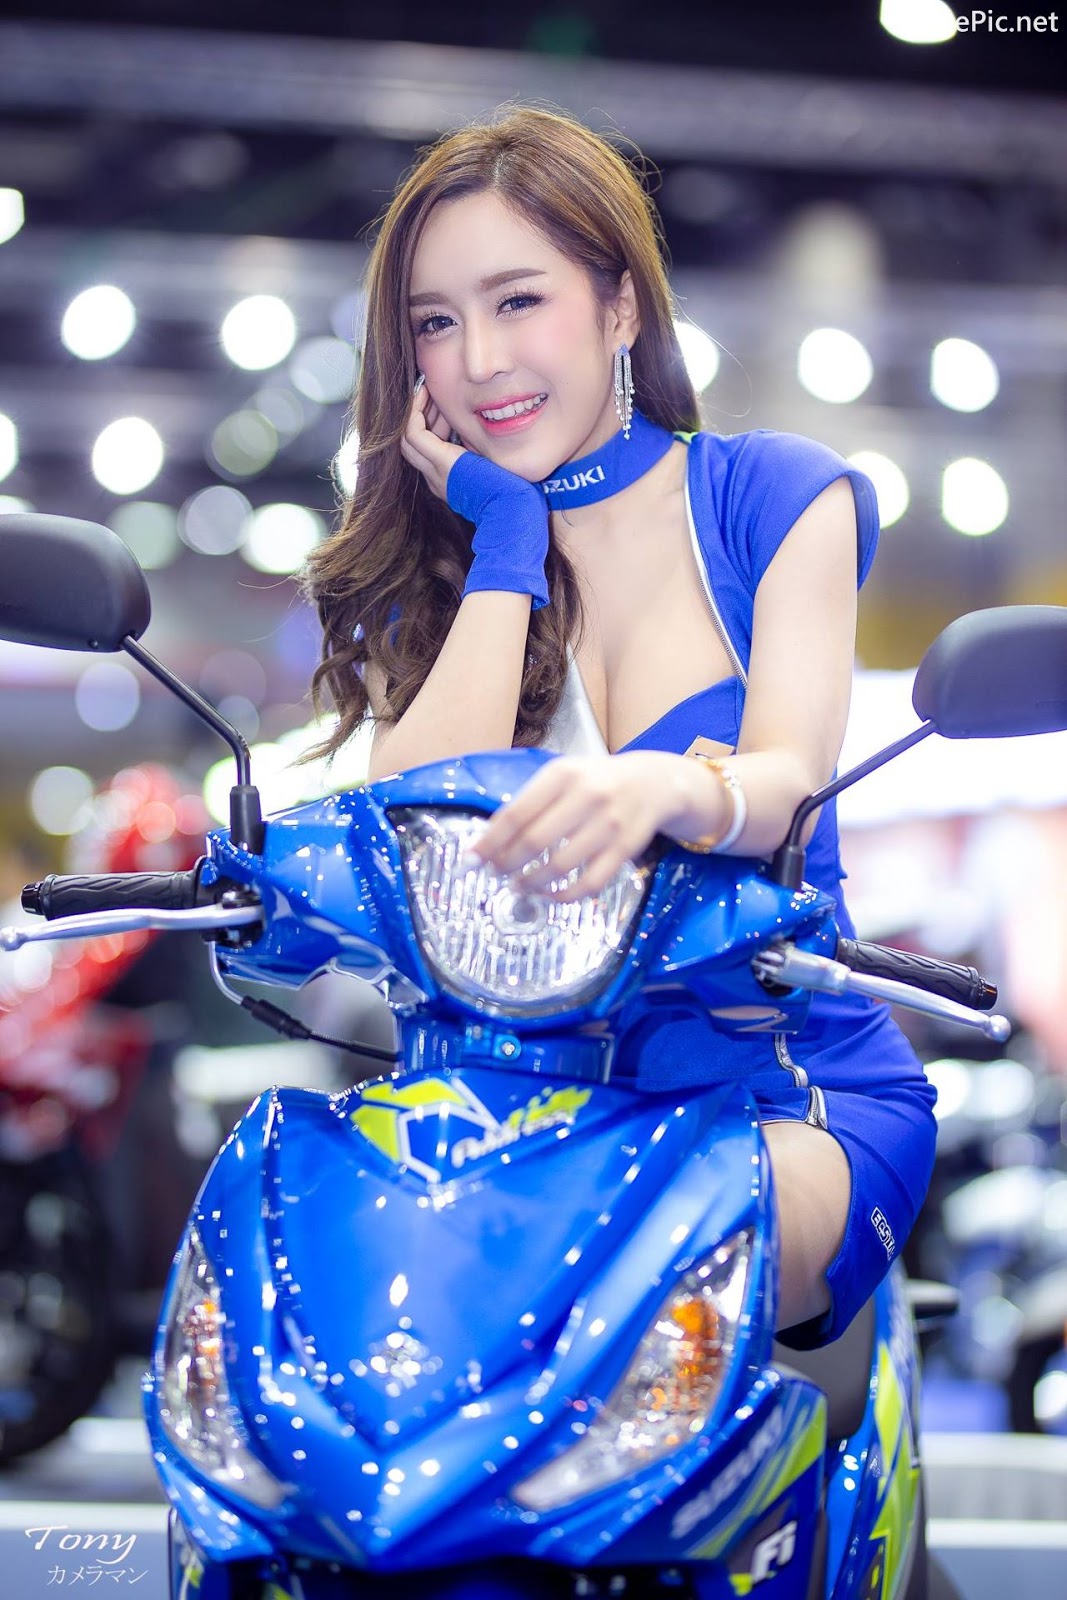 Image-Thailand-Hot-Model-Thai-Racing-Girl-At-Big-Motor-2018-TruePic.net- Picture-12